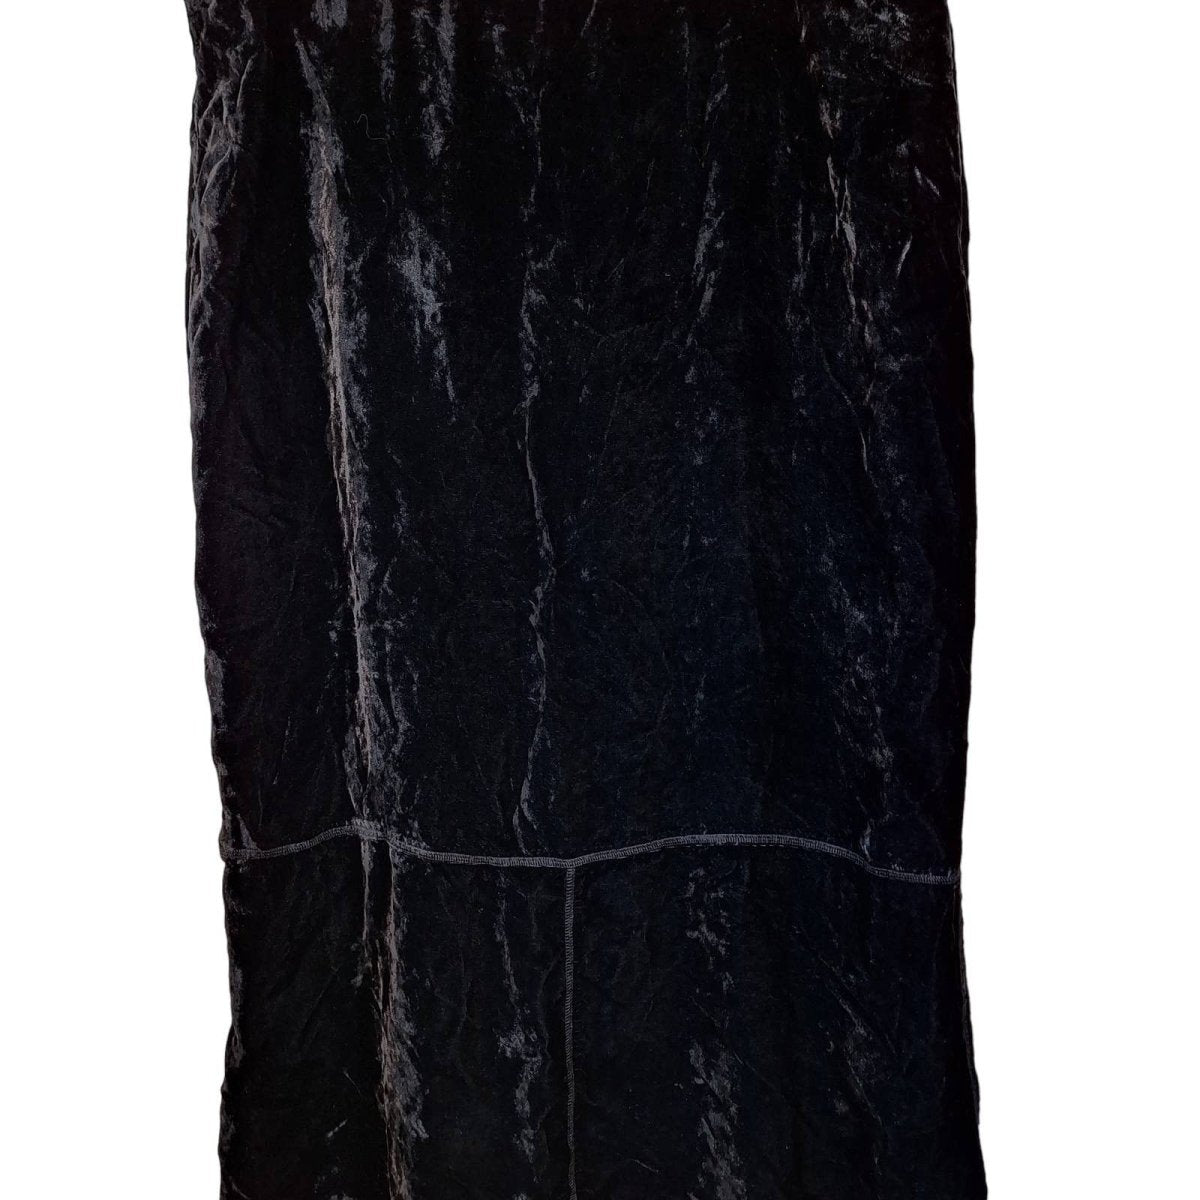 Vintage 90s/Y2K Black Velvet Midi/Maxi Skirt Women's Size 18 Waist 40" - themallvintage The Mall Vintage